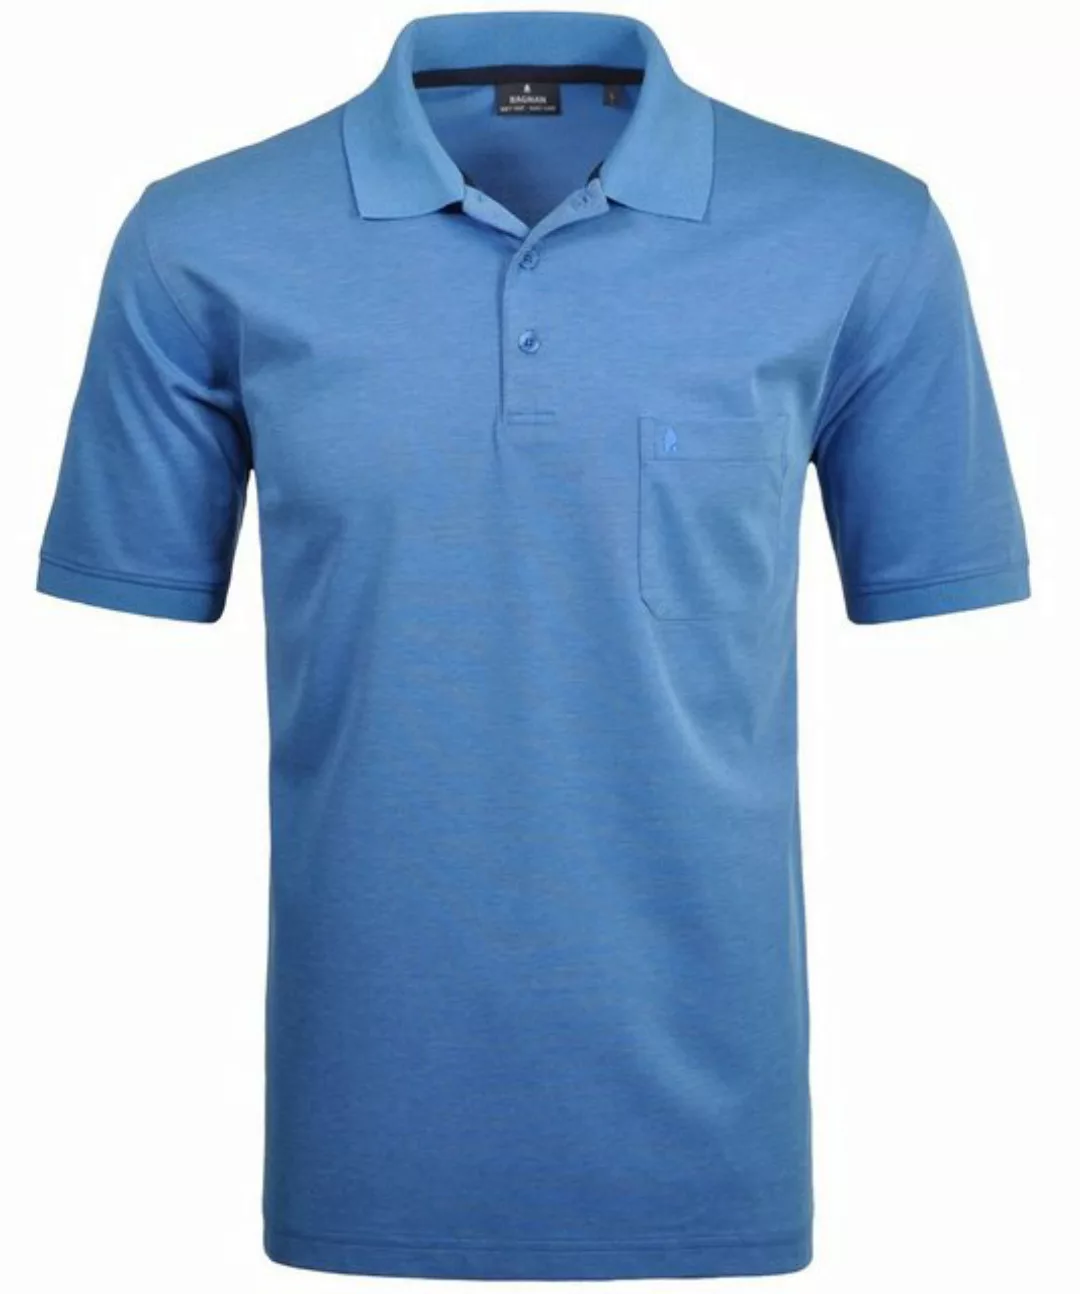 RAGMAN Poloshirt Polo button short sleeve günstig online kaufen